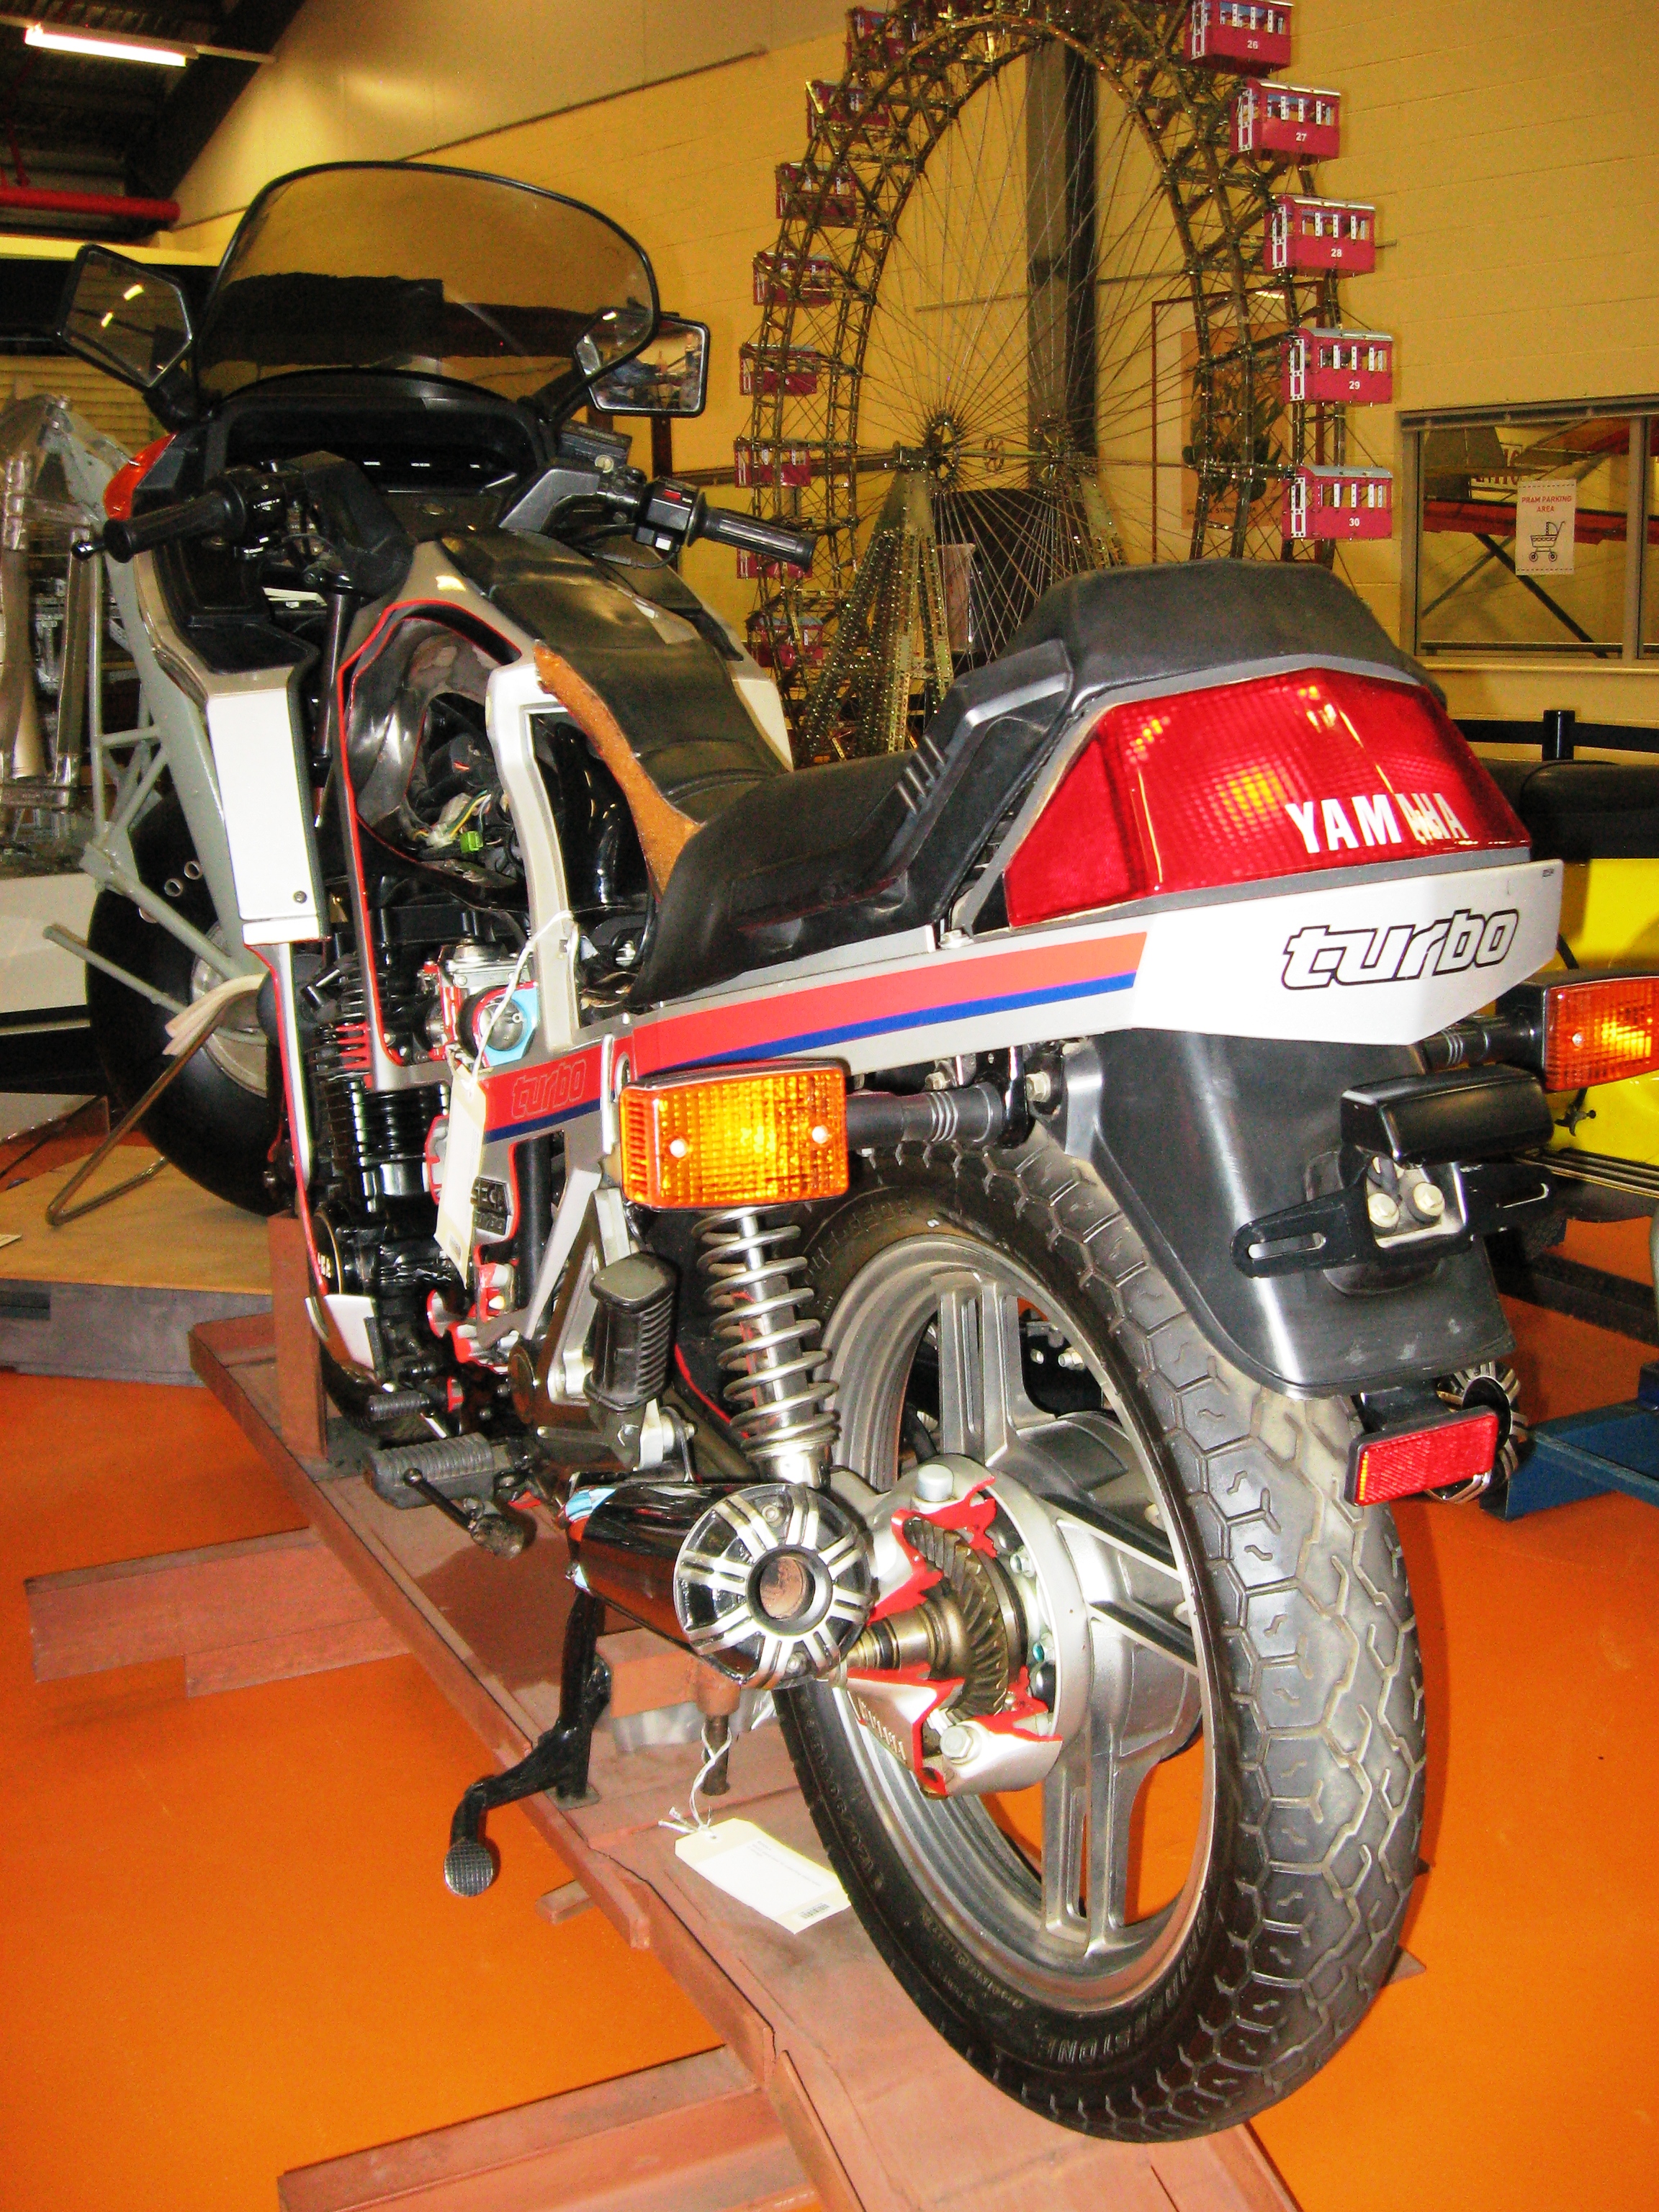 Sectioned Yamaha XJ650 Seca Turbo motorcycle